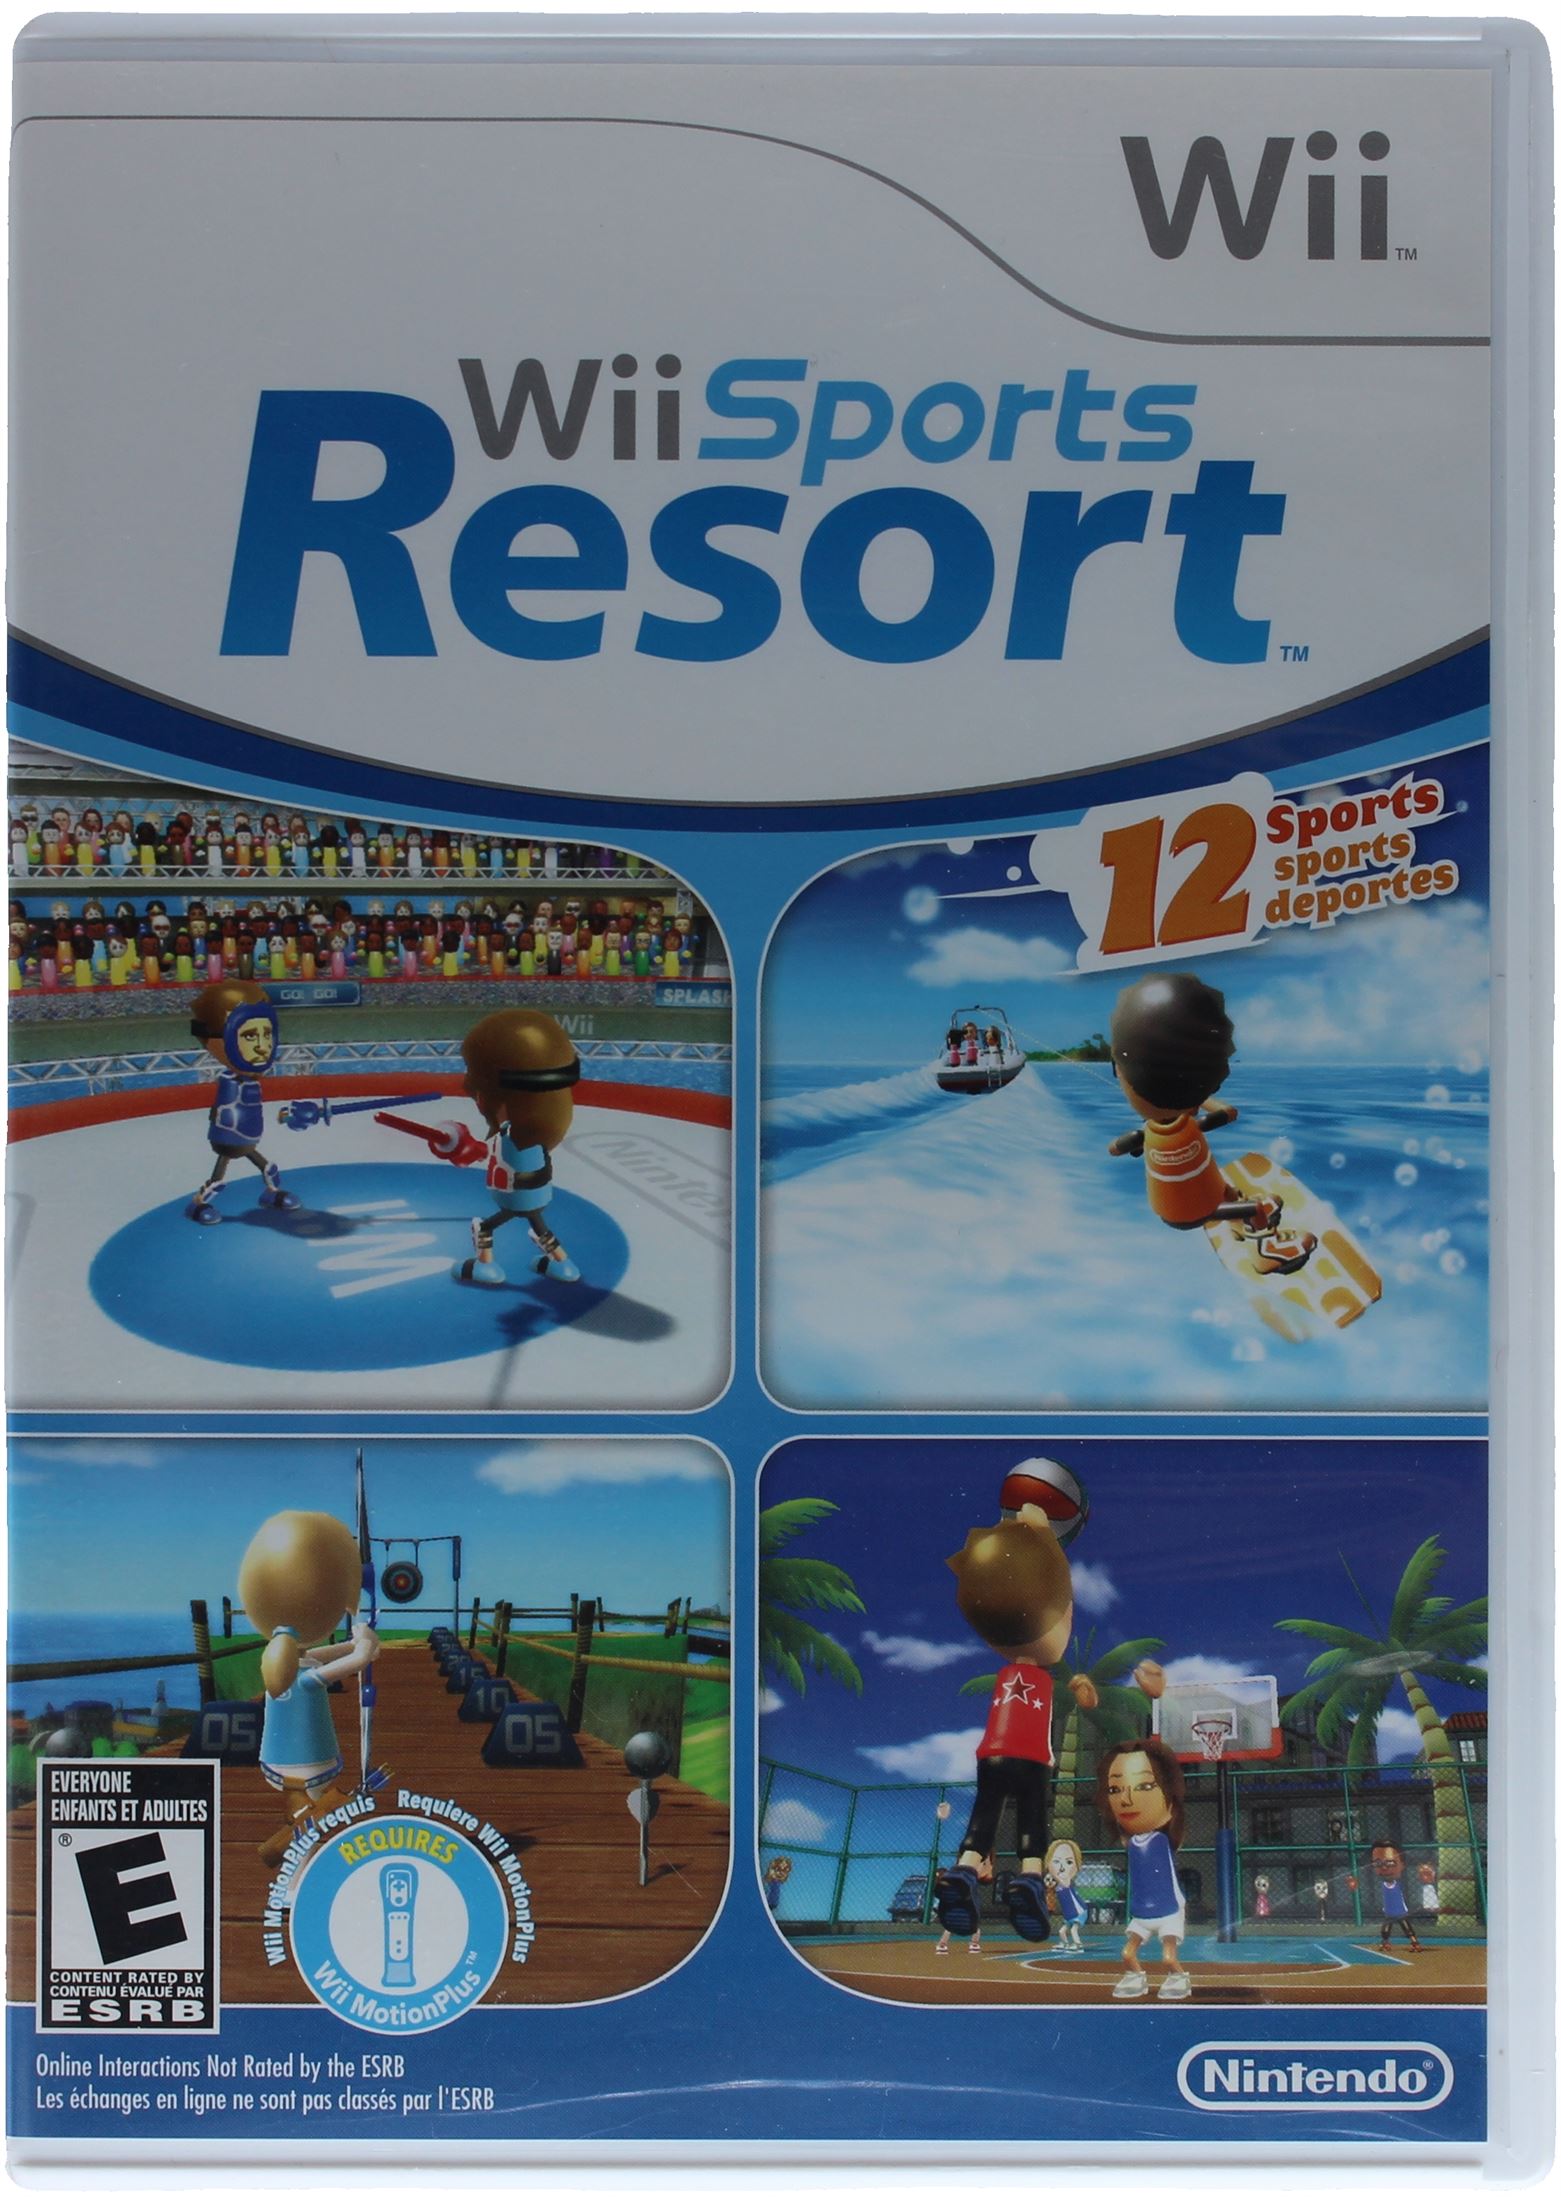 Nintendo Restored Wii With Wii Sports & Wii Sports Resort India